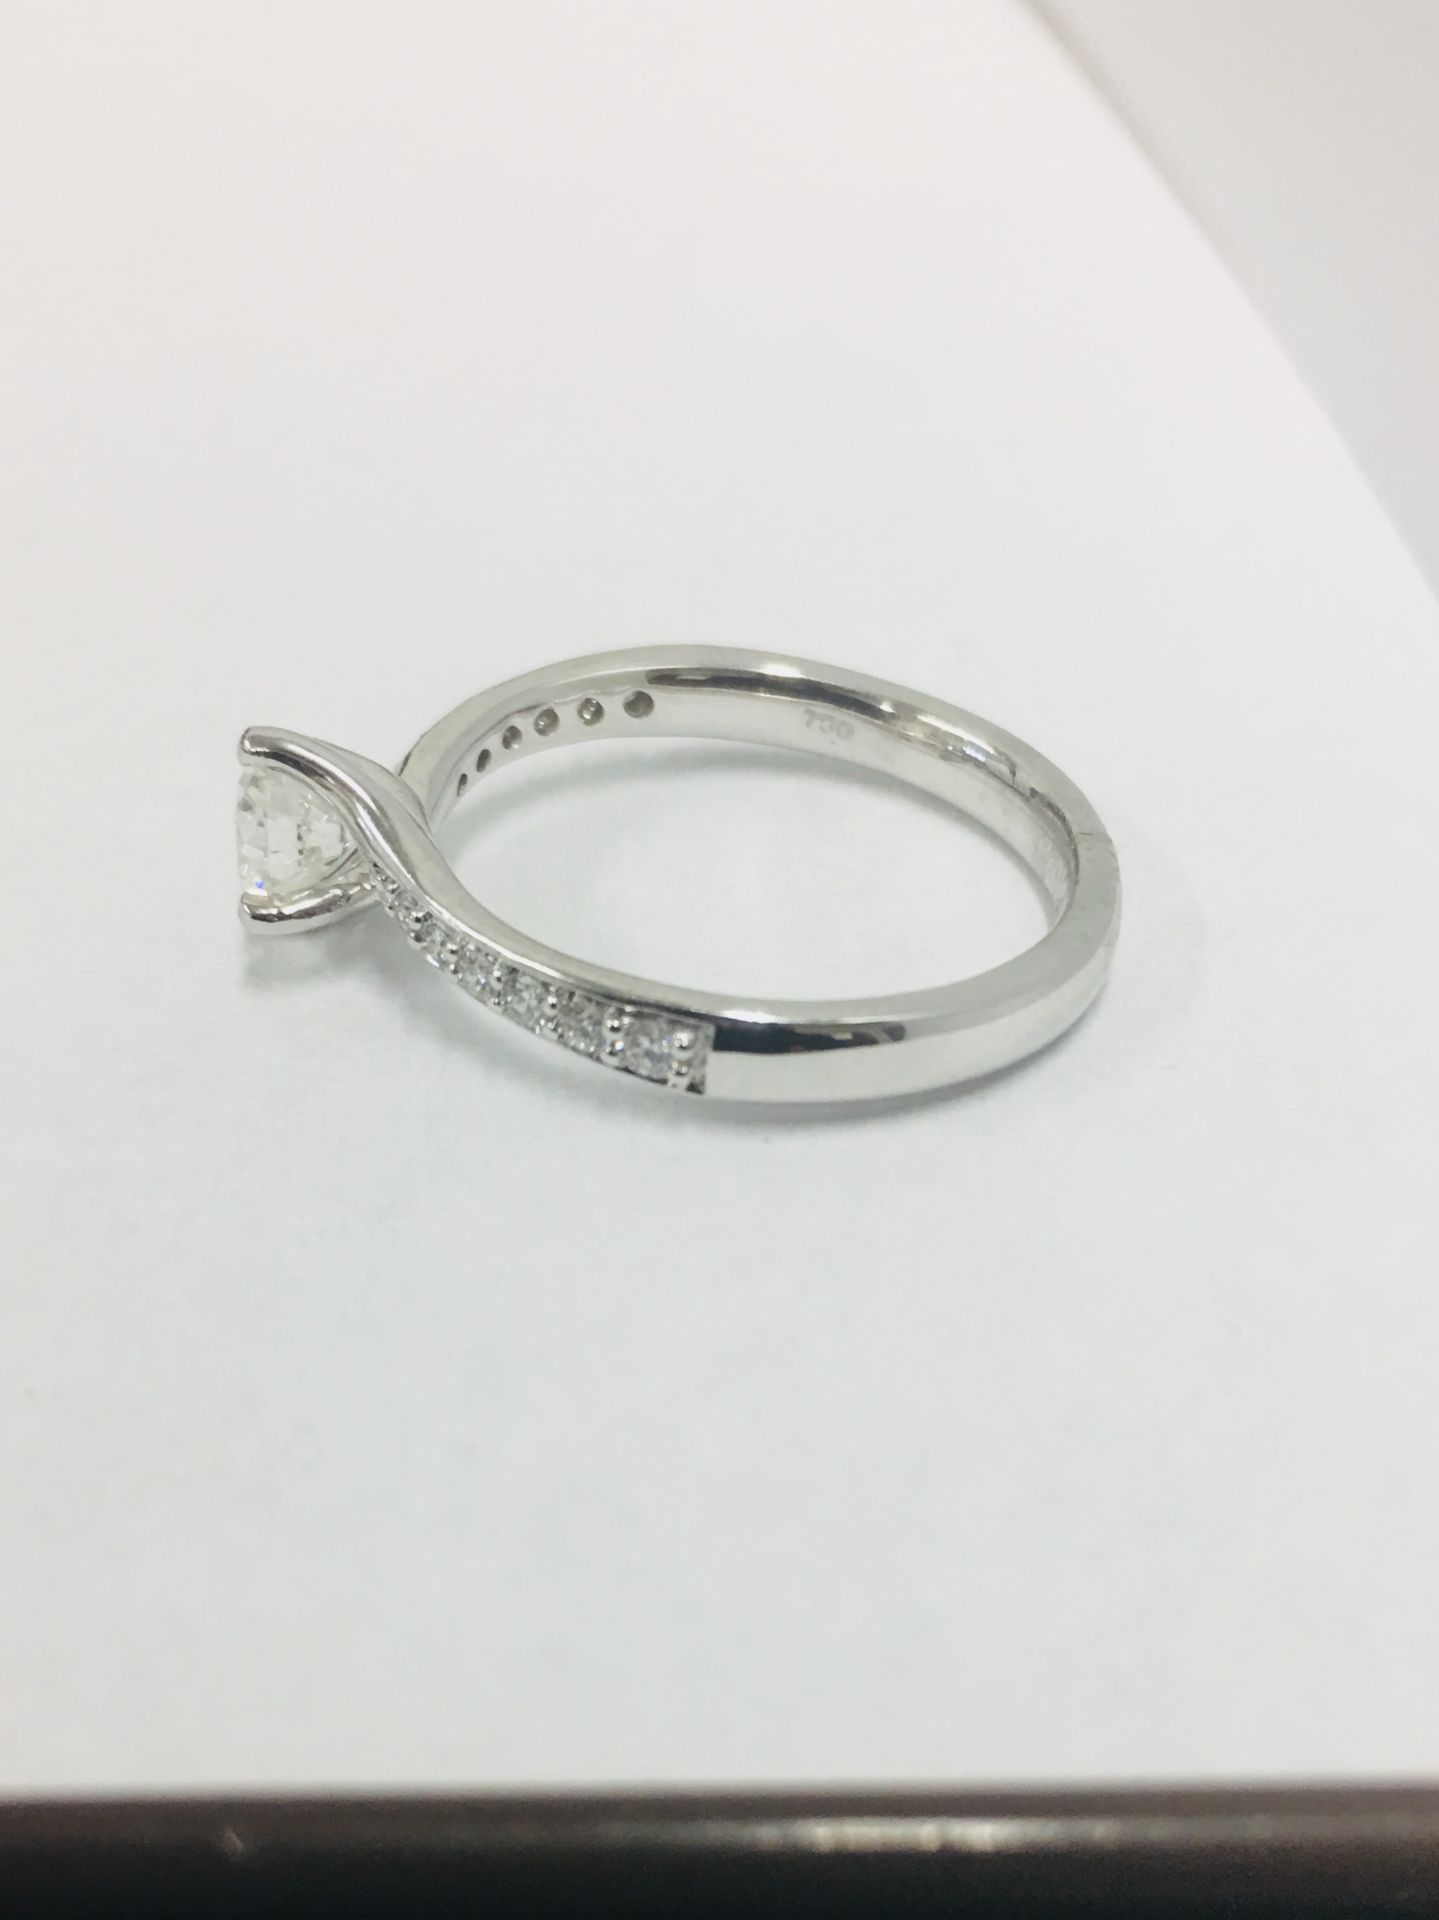 platinum damond solitaire ring,0.50ct brilliant cut diamond D colour vs clarity,3.83gms platinum - Image 4 of 7